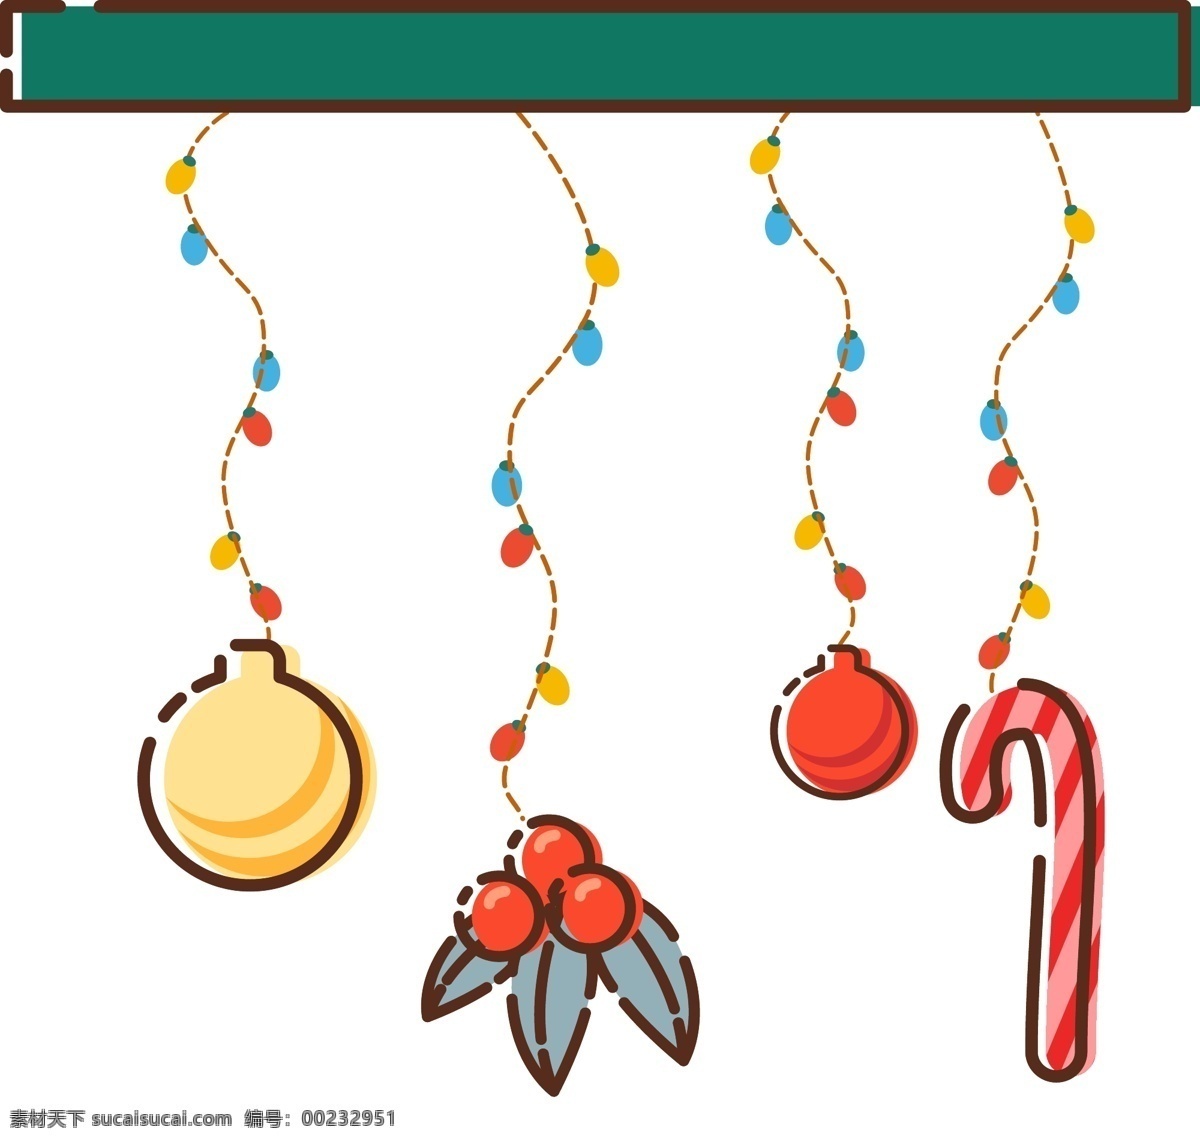 mbe 圣诞挂件 铃铛 拐杖 樱桃 彩灯 装饰 元素 可爱 设计元素 矢量图 装饰元素 装饰图案